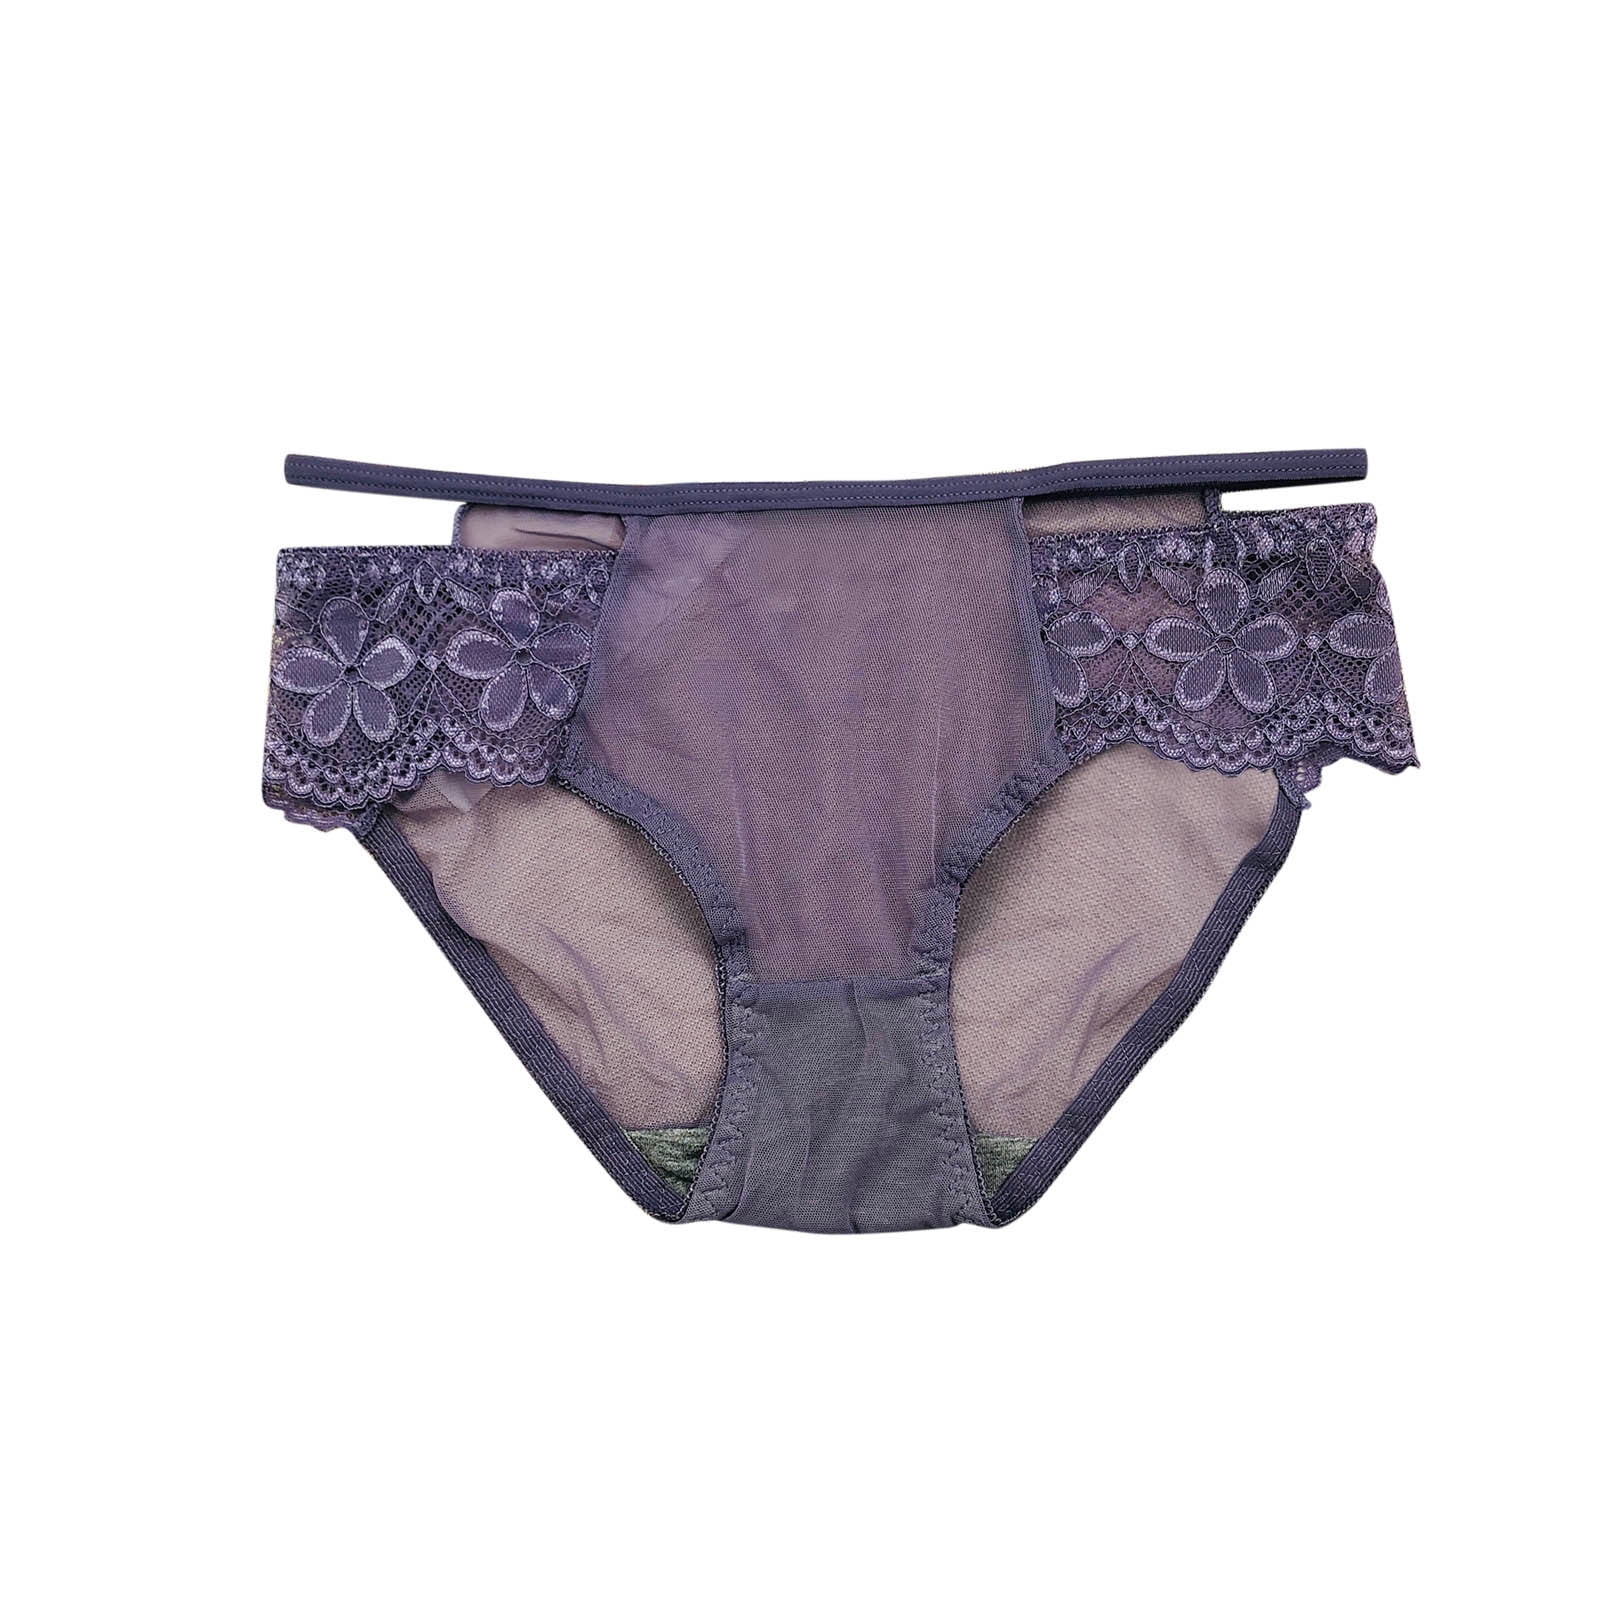 zuwimk Panties For Women Thong,Cotton G String Thongs for Women T Back  Gstring Underwear Seamless Panties Tangas Purple,One Size 